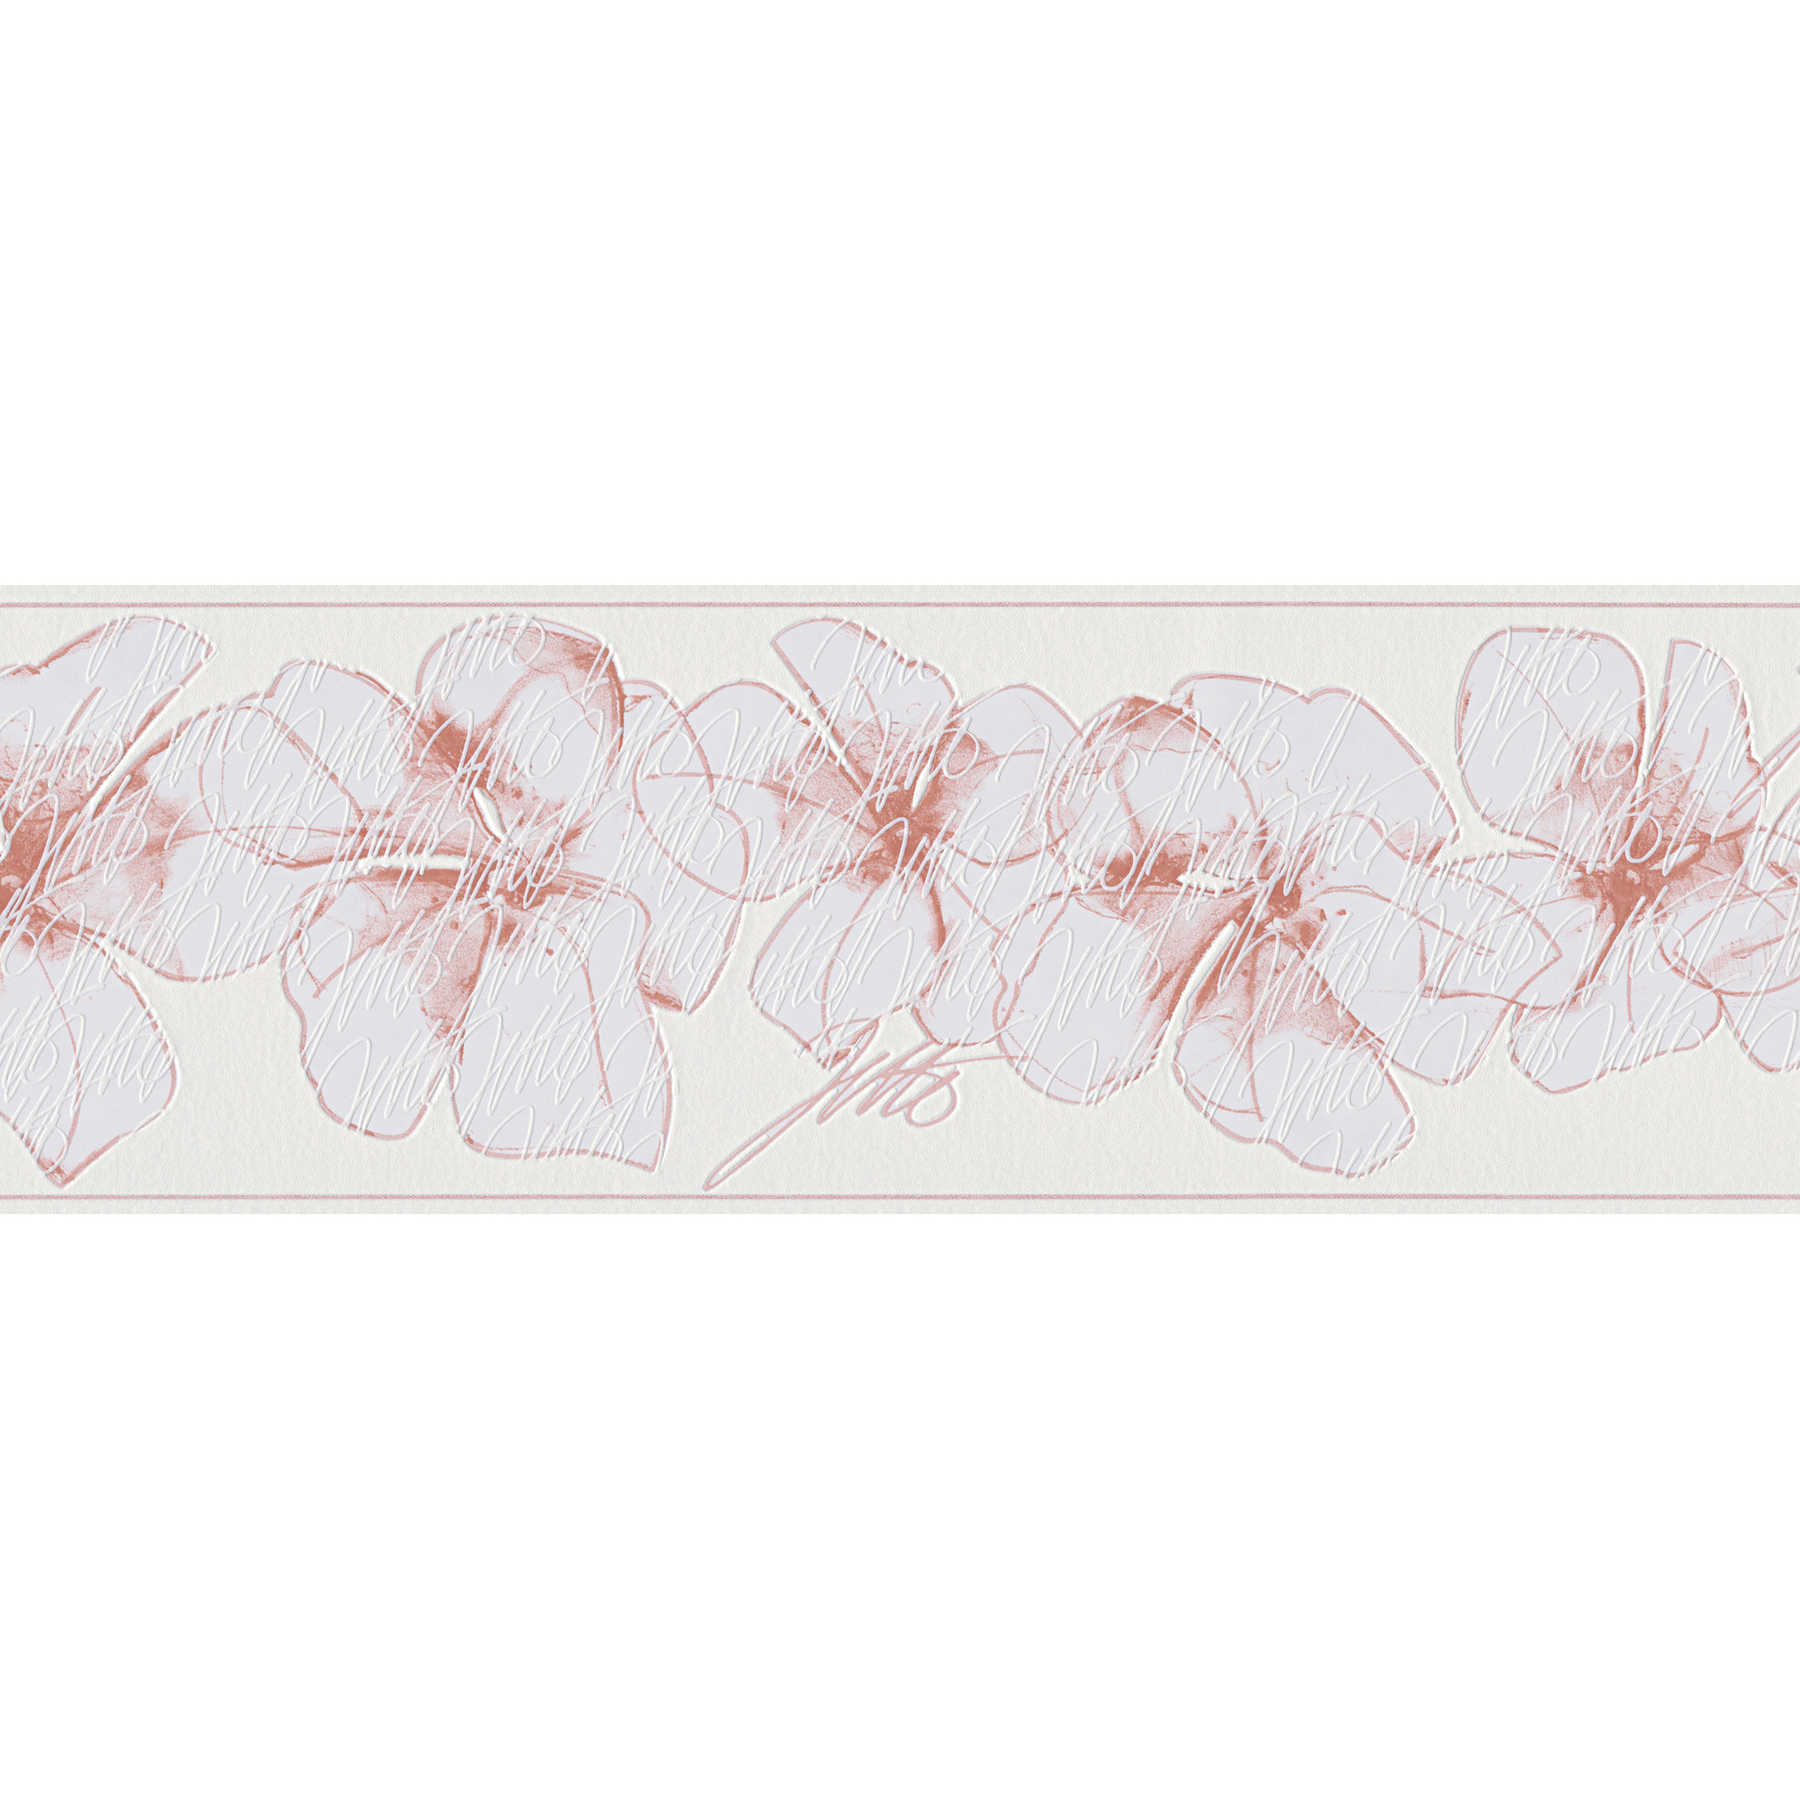         Tapetenbordüre mit Blütenmuster – Rosa, Weiß
    